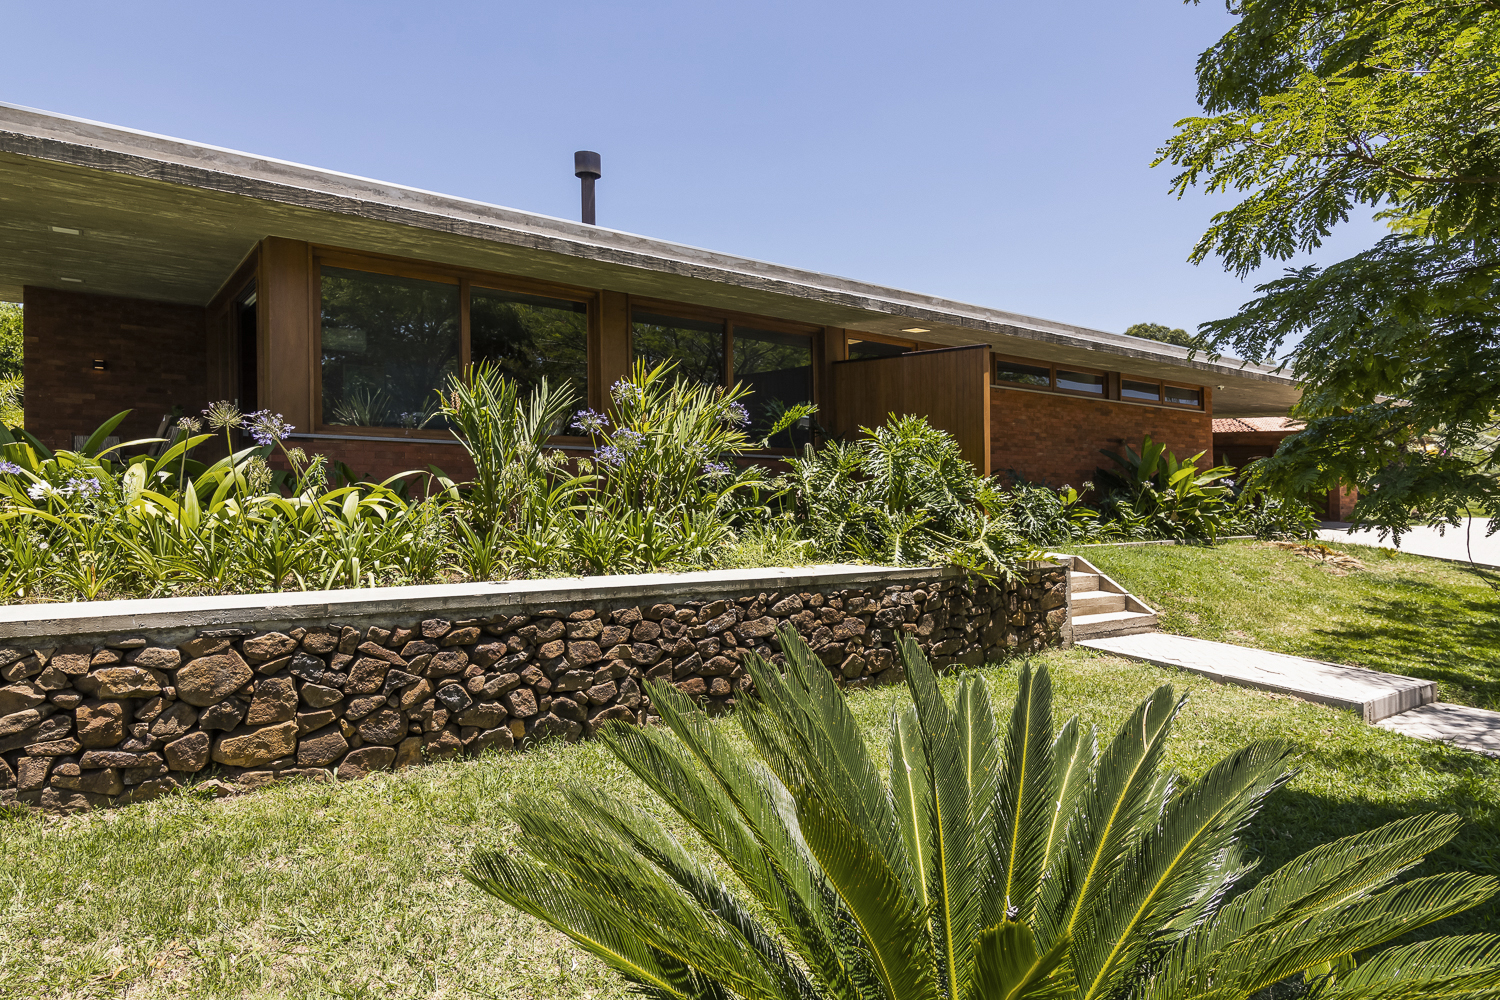 The large concrete slab defines the shape of the Boa Vista House